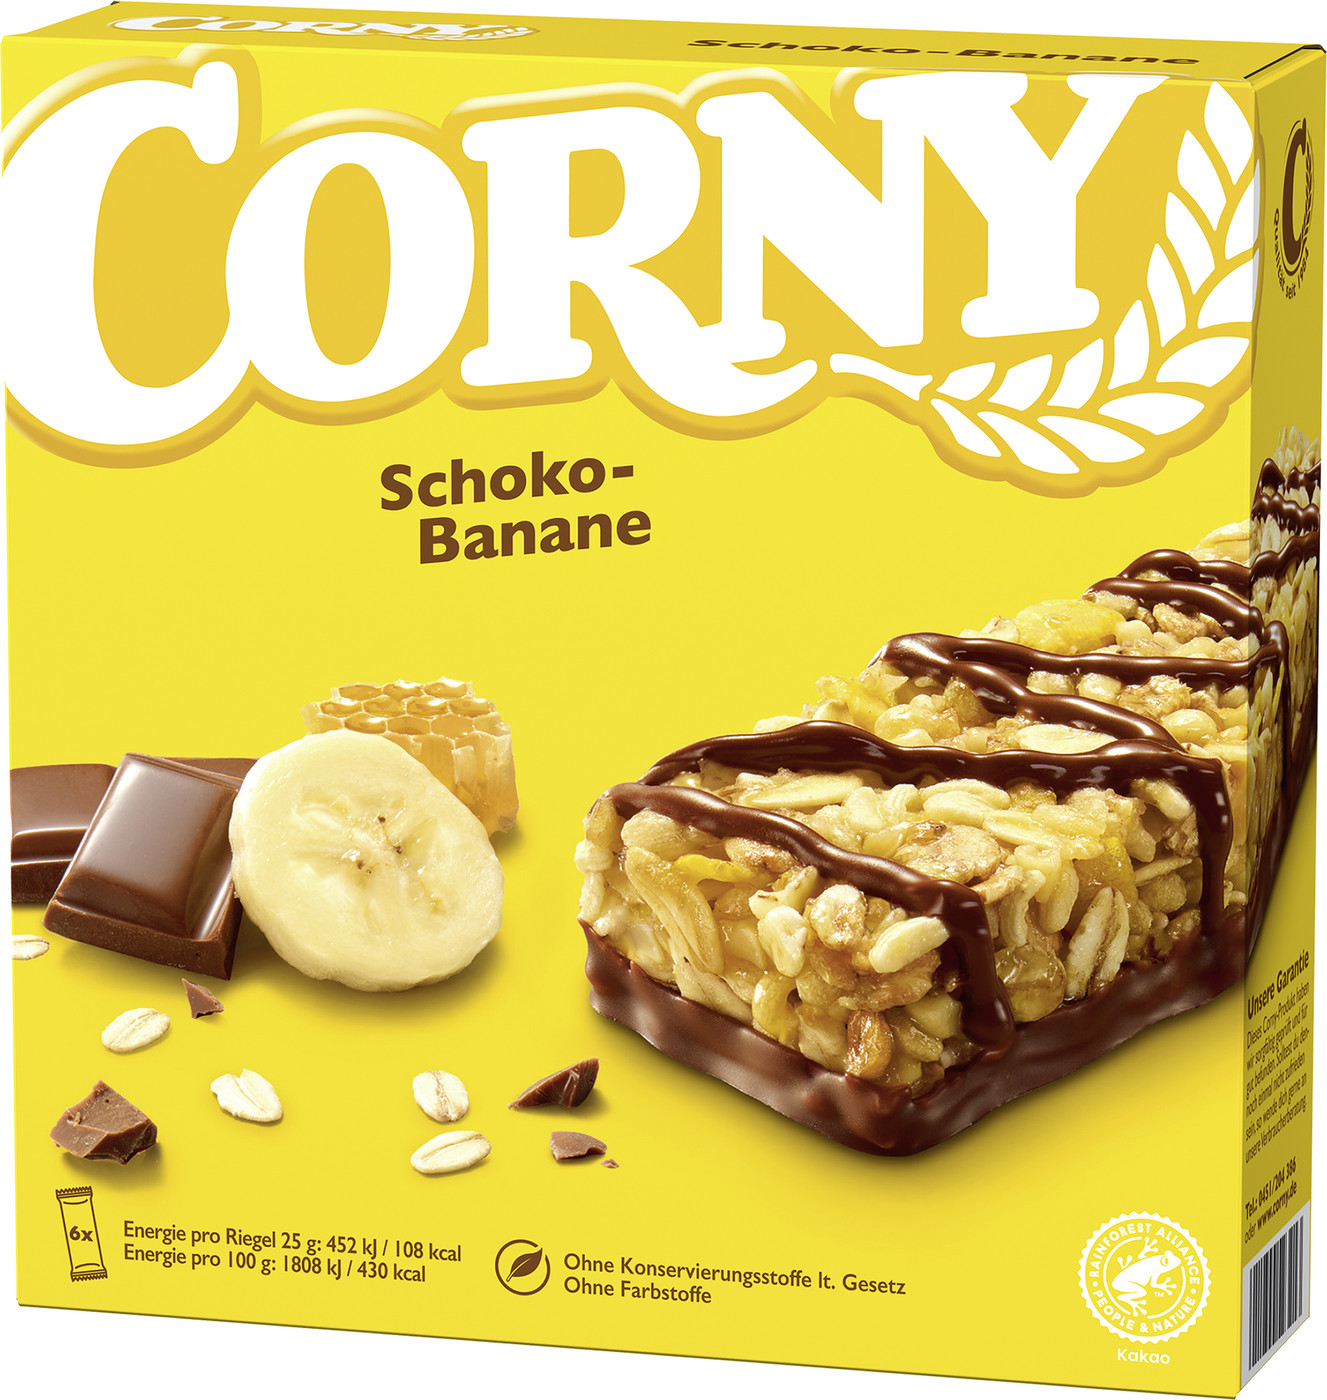 Corny Schoko-Banane Riegel 6ST 150G